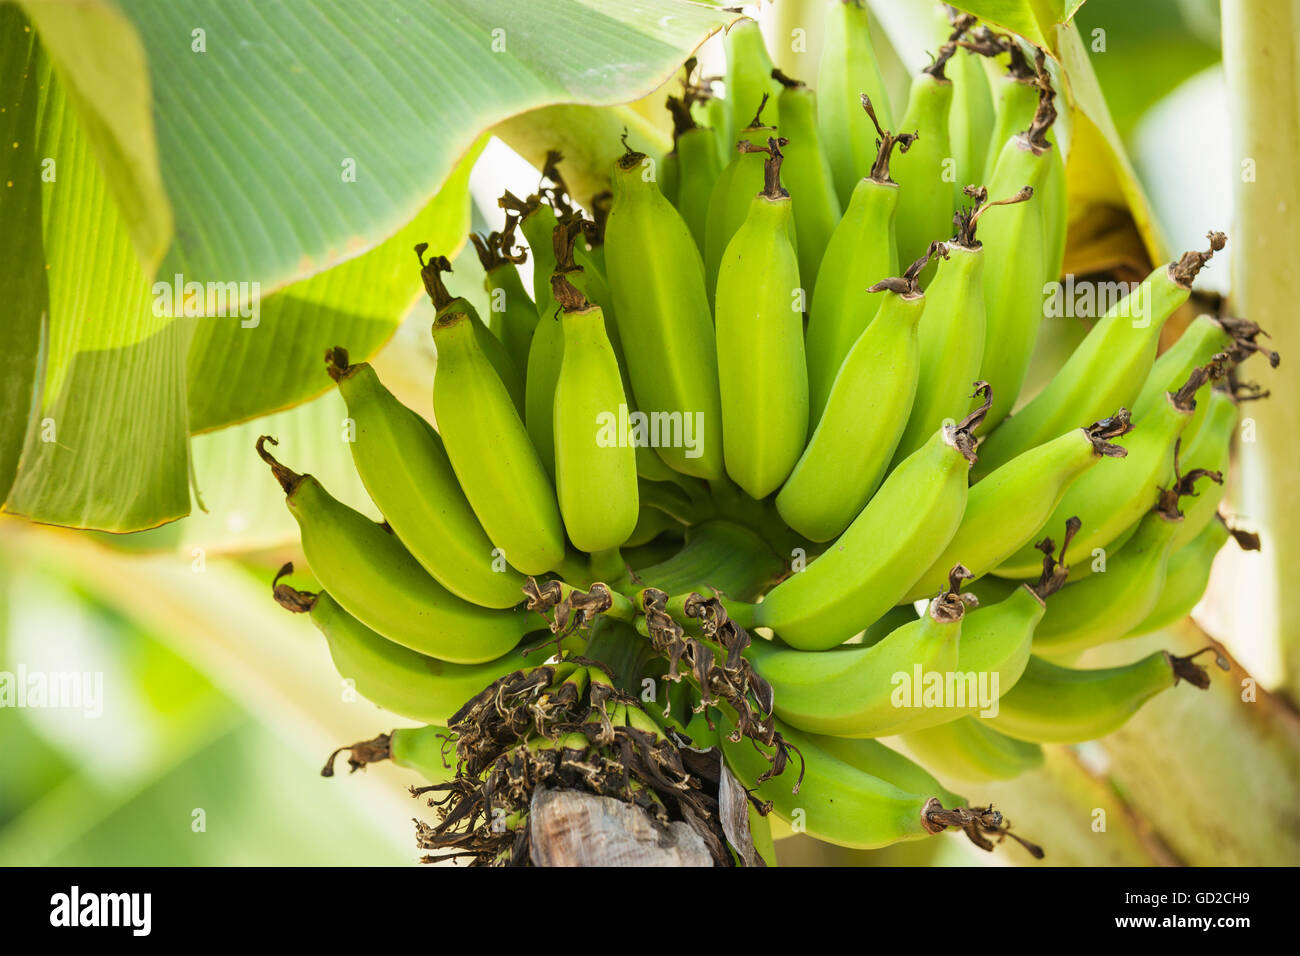 Apple bananas (Musa acuminata x Musa balbisiana) growing; Captain Cook, Island of Hawaii, Hawaii, United States of America Stock Photo